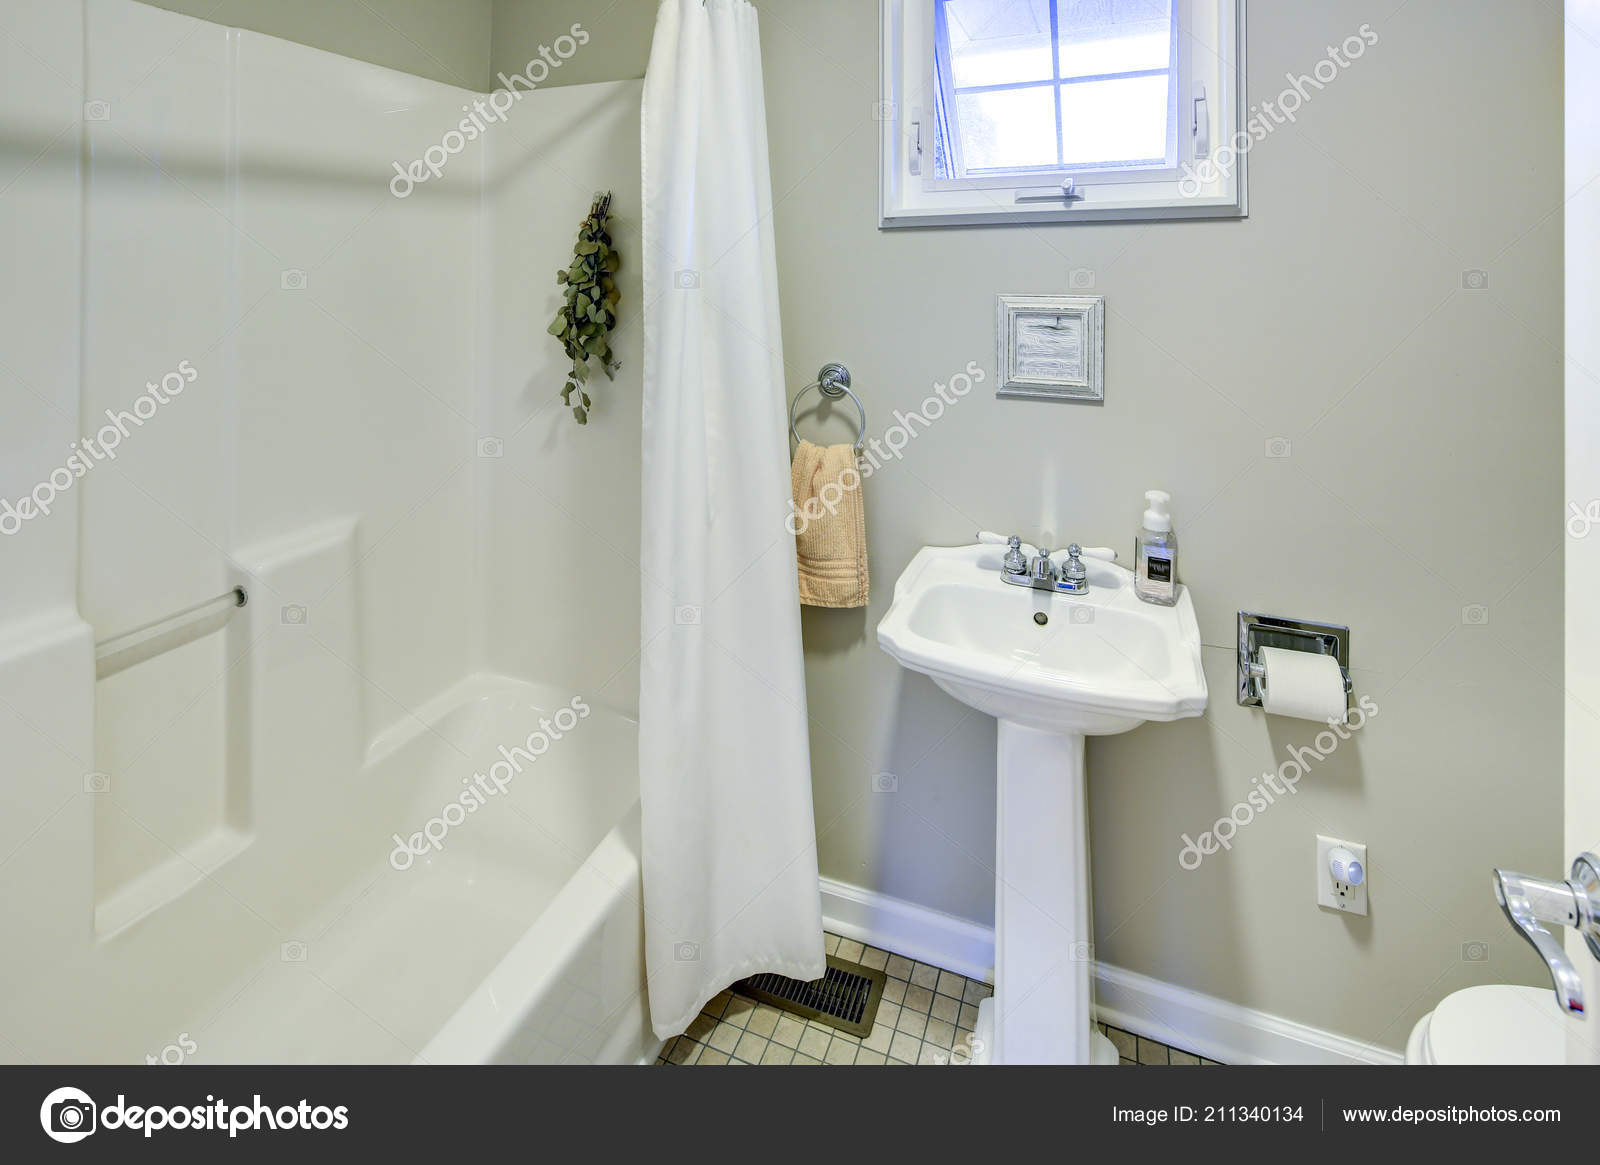 Rustic Bathroom White Pedestal Sink Tiled Floor Stock Photo